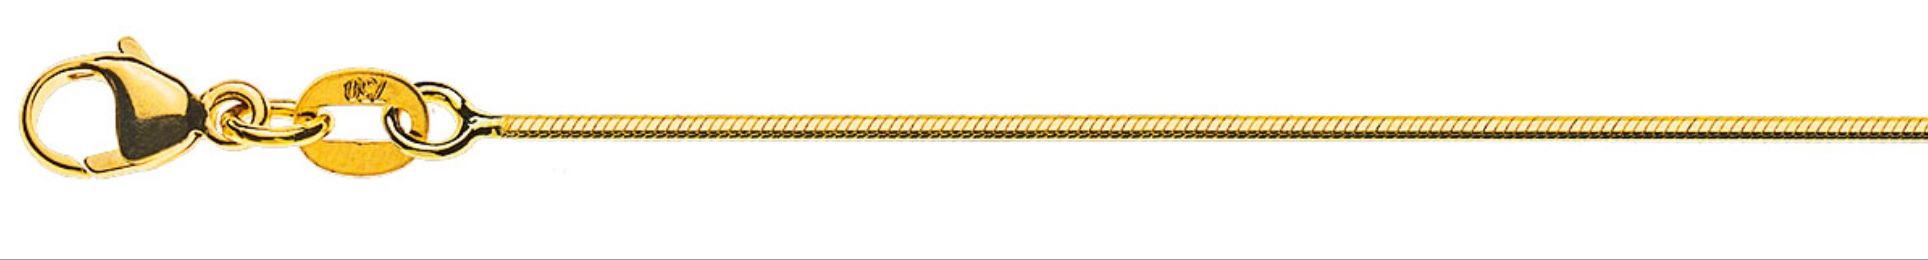 AURONOS Prestige Necklace yellow gold 18K snake chain diamond 40cm 1.0mm